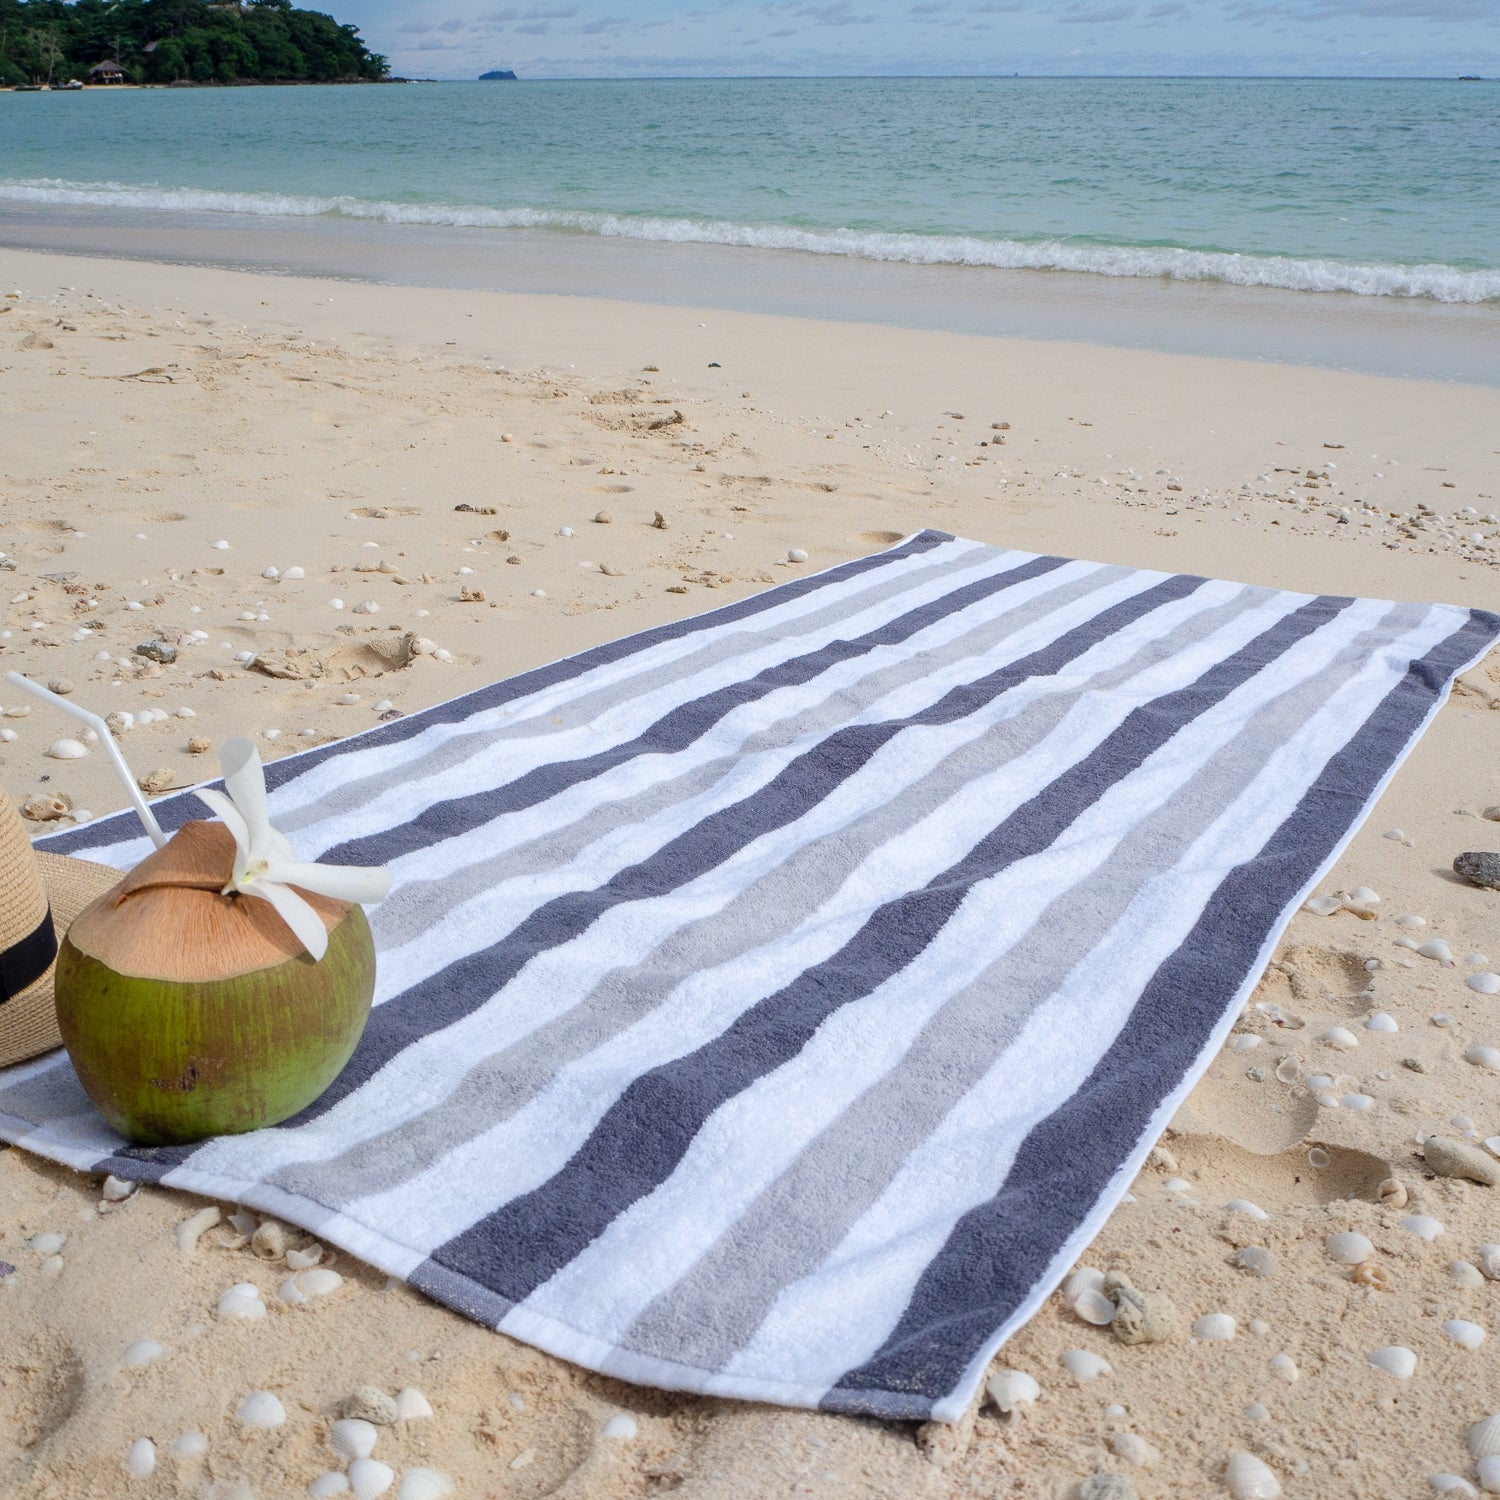 Black & Grey Cabo Cabana Beach Towels — She la la